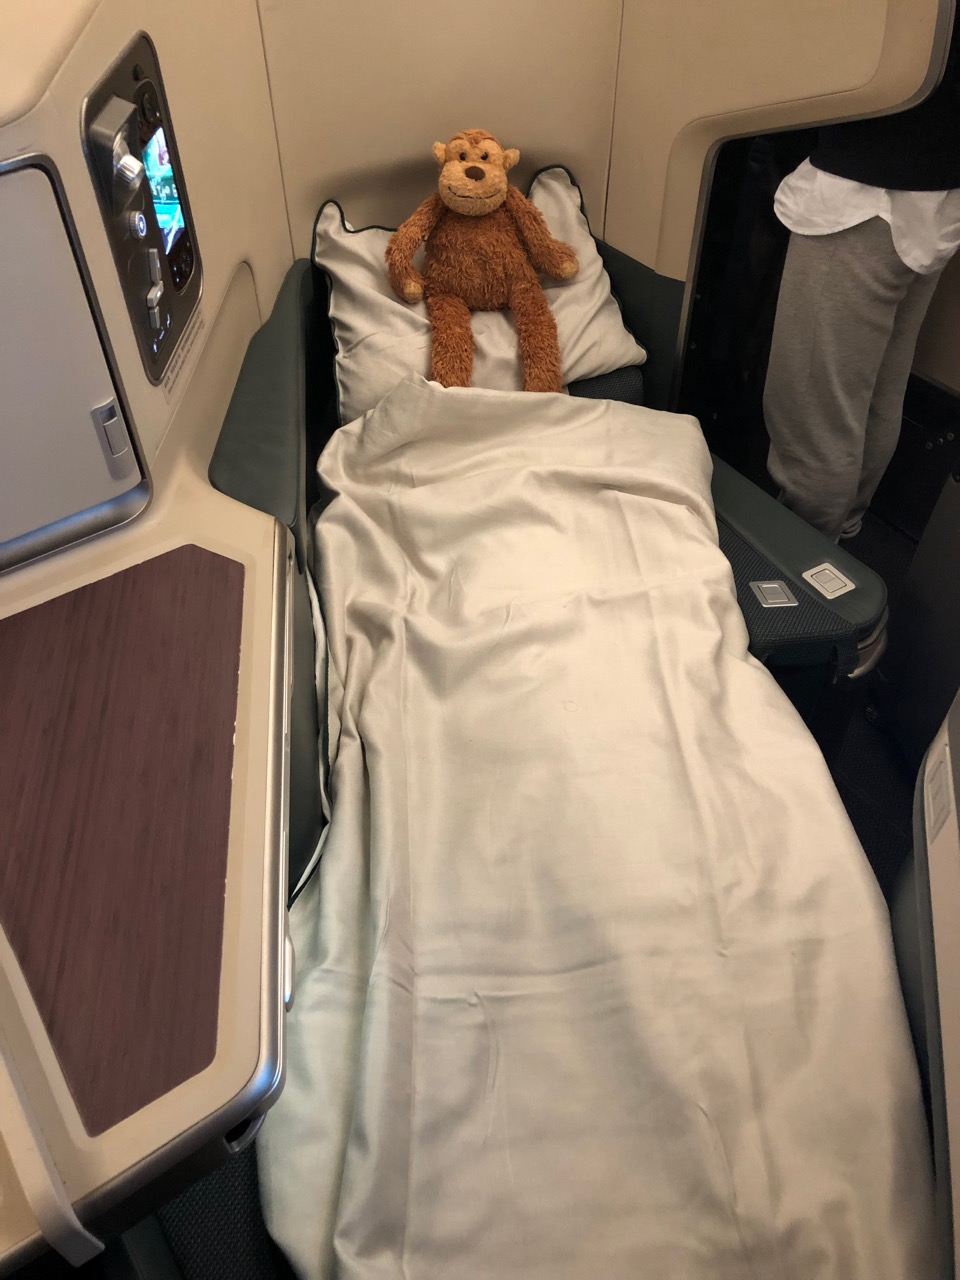 a teddy bear in a bed